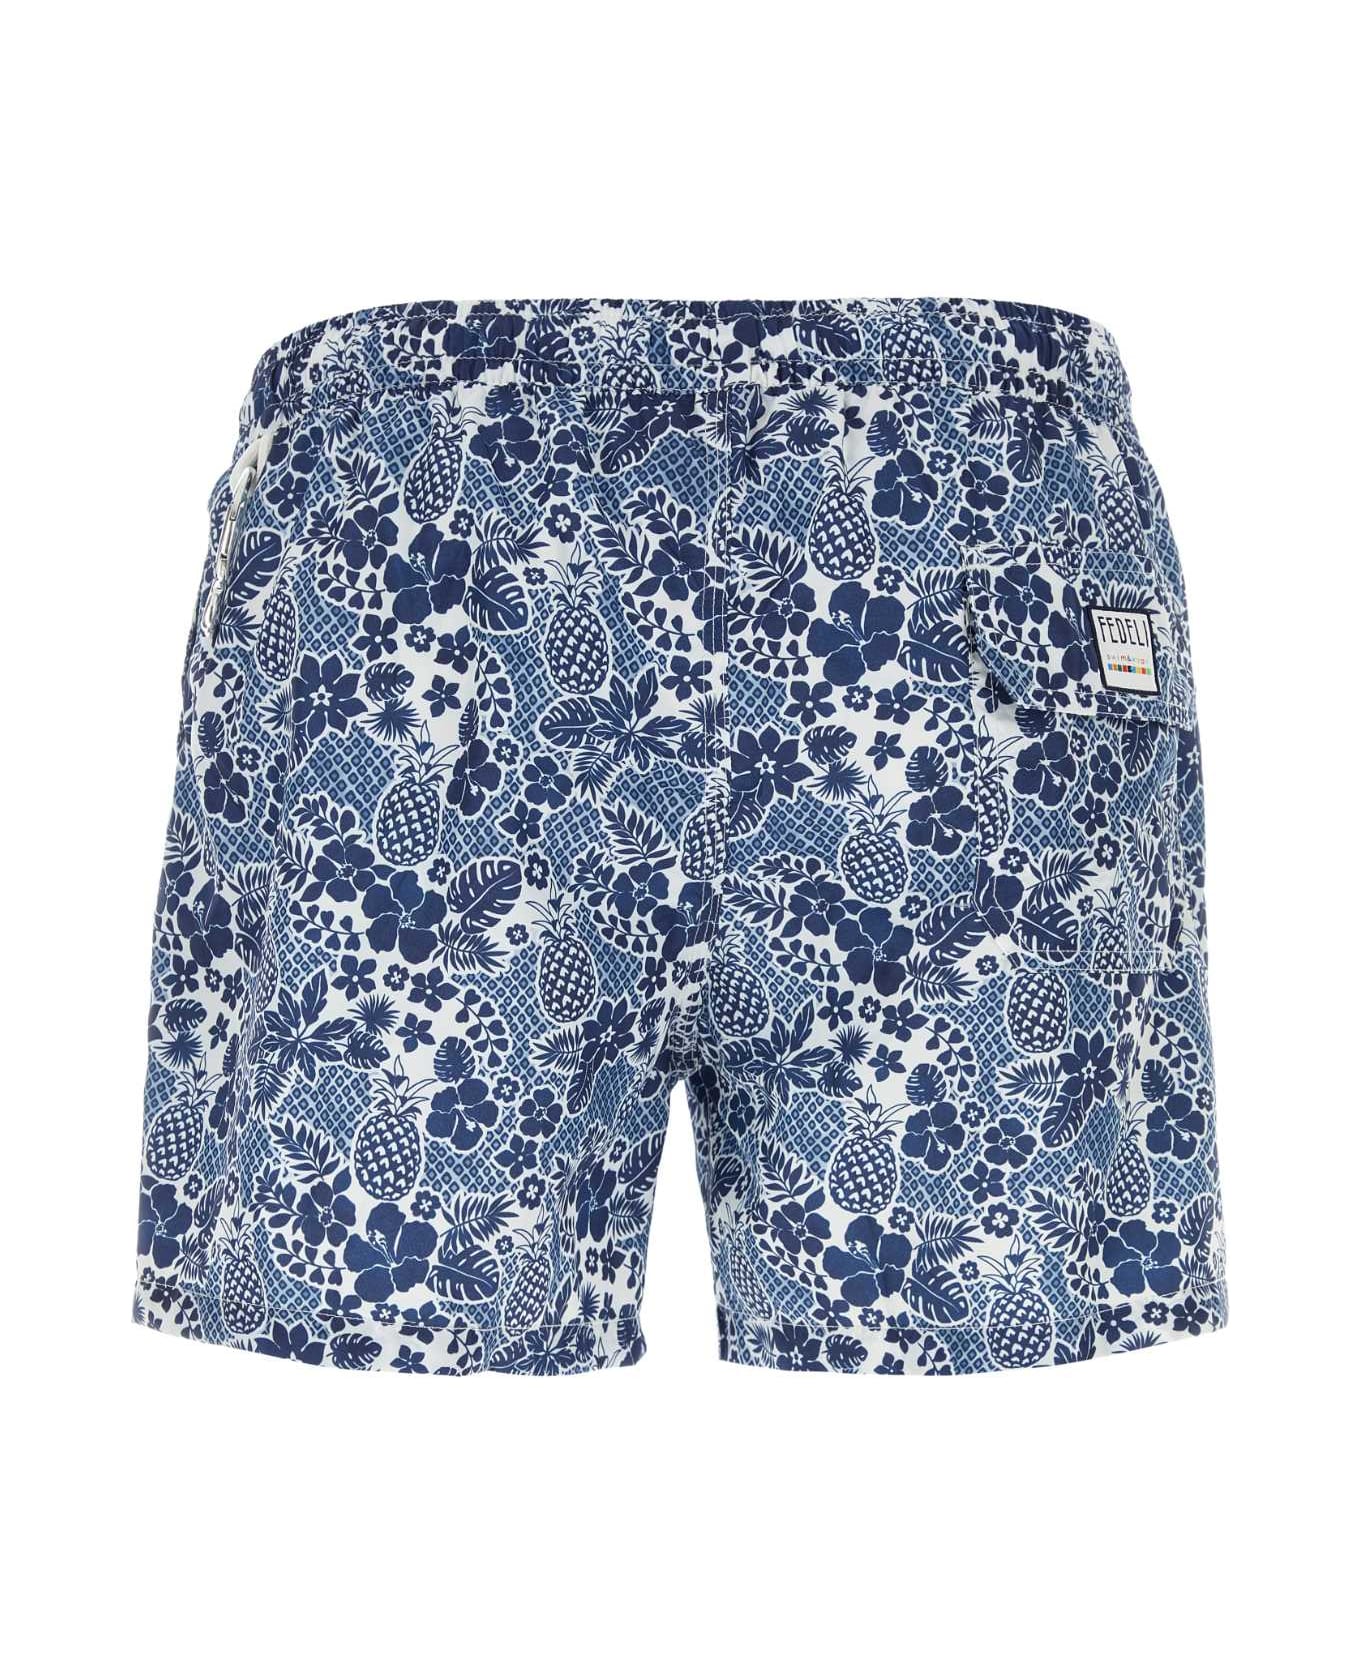 Fedeli Printed Polyester Swimming Shorts - FANTASIABLU